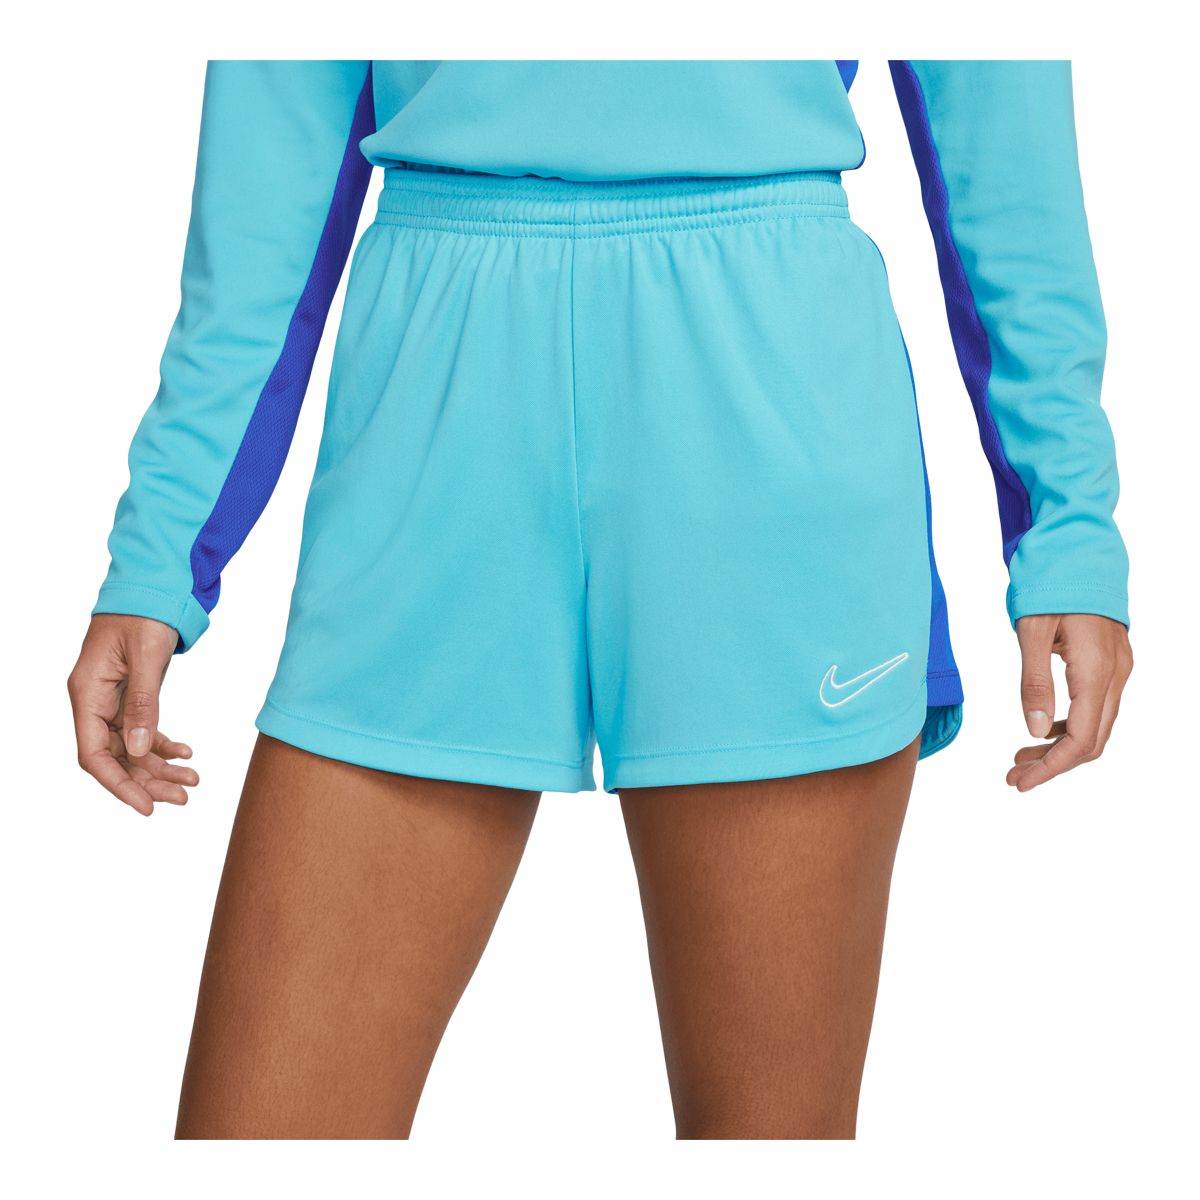 Kit Nike Academy 23 for Female. Track suit + Jersey + Shorts + Socks